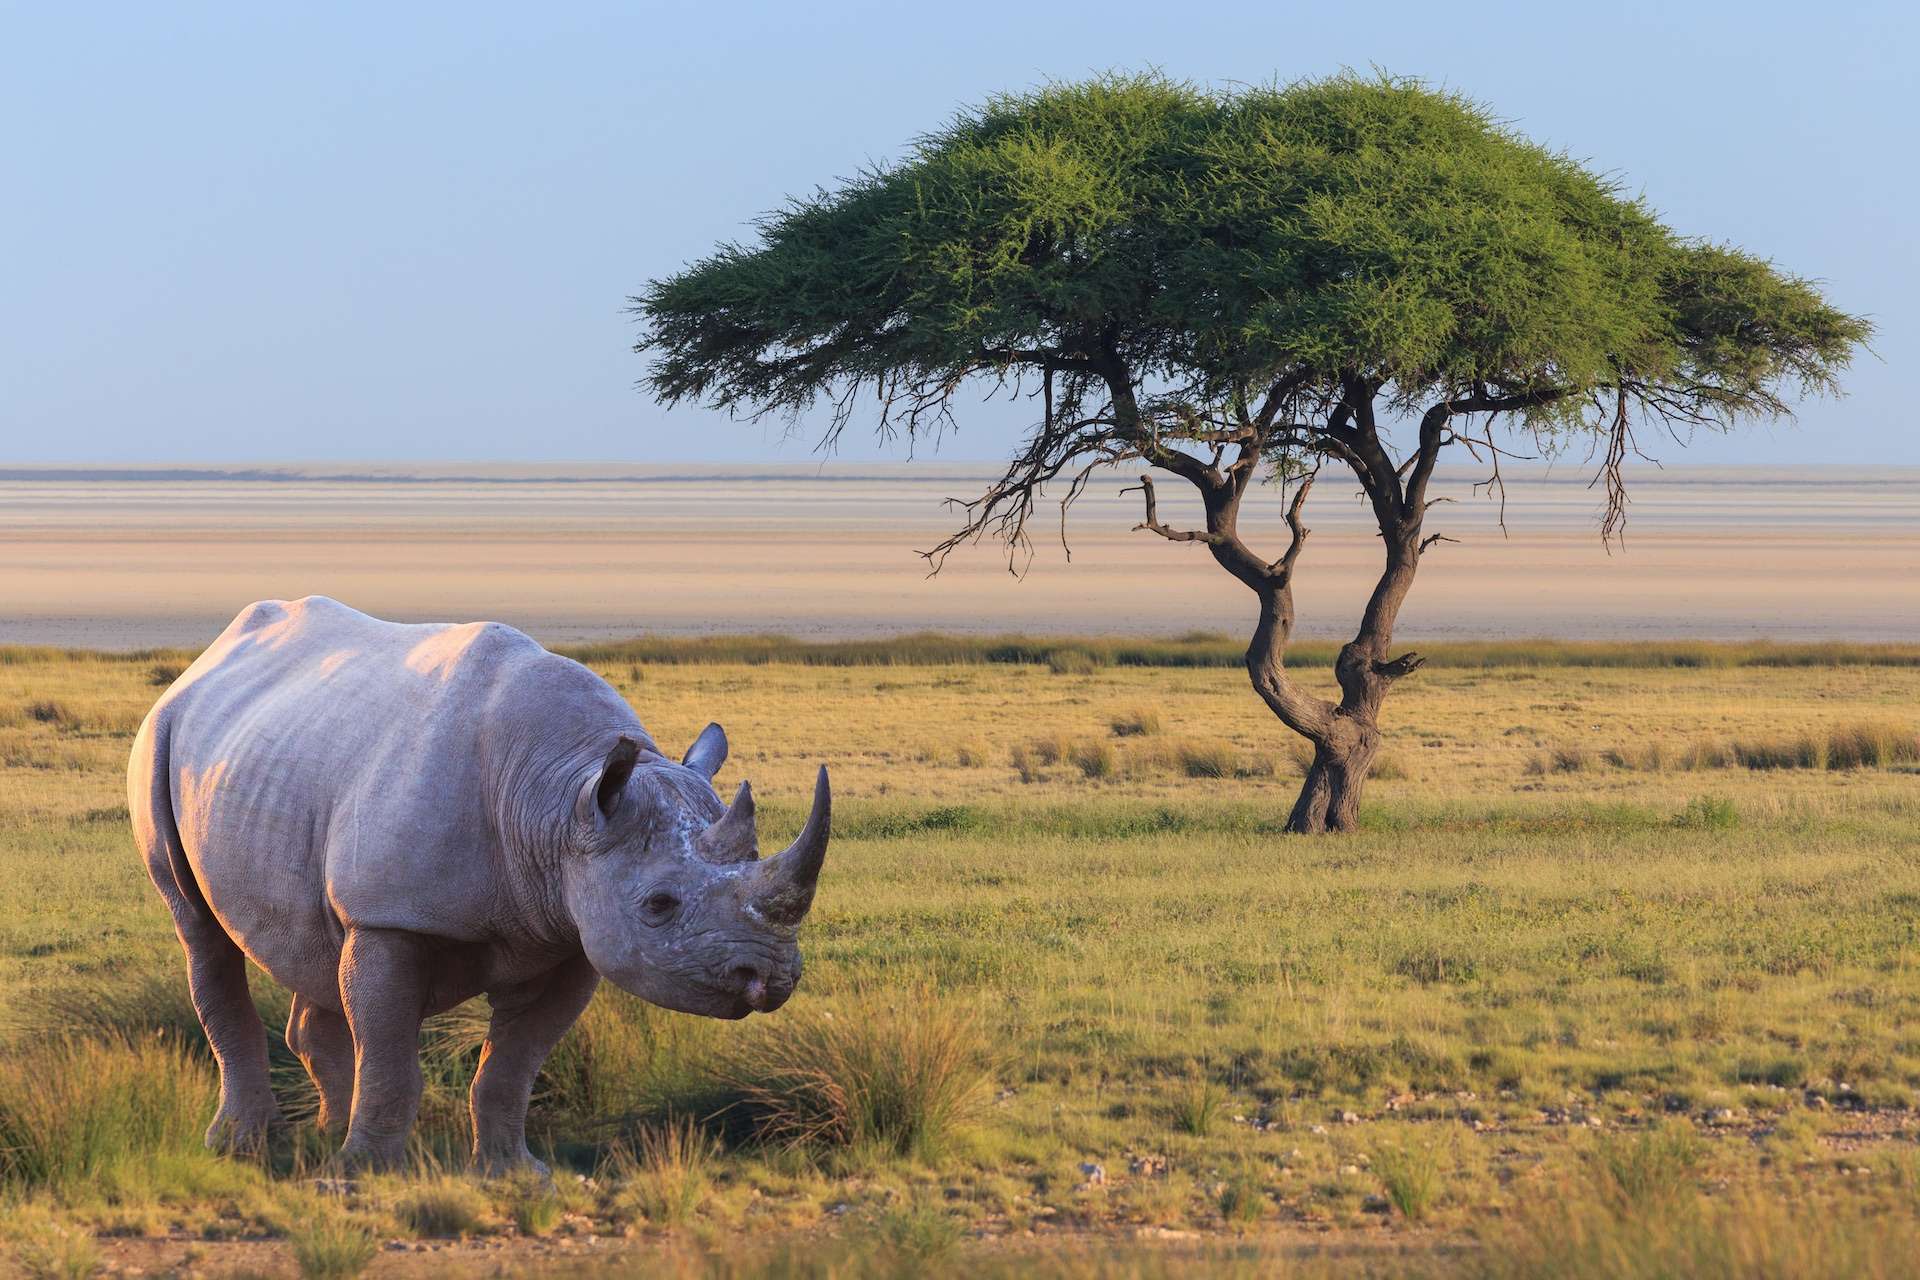 Black rhino in South Africa.